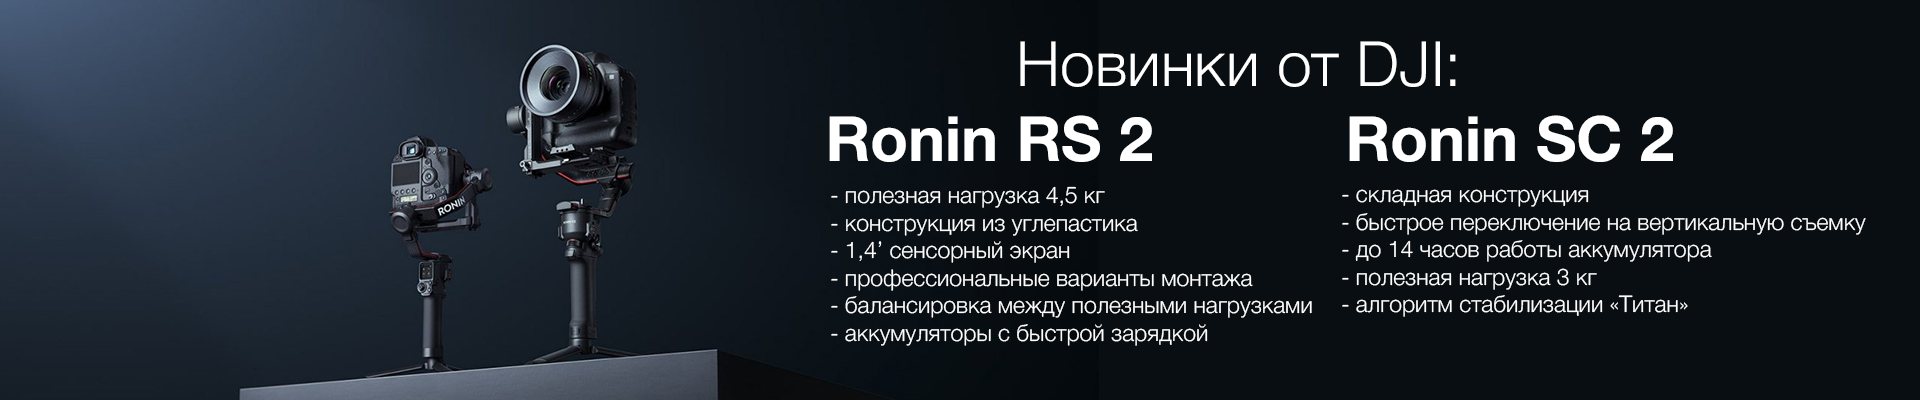 DJI Ronin RS 2 and RSC 2